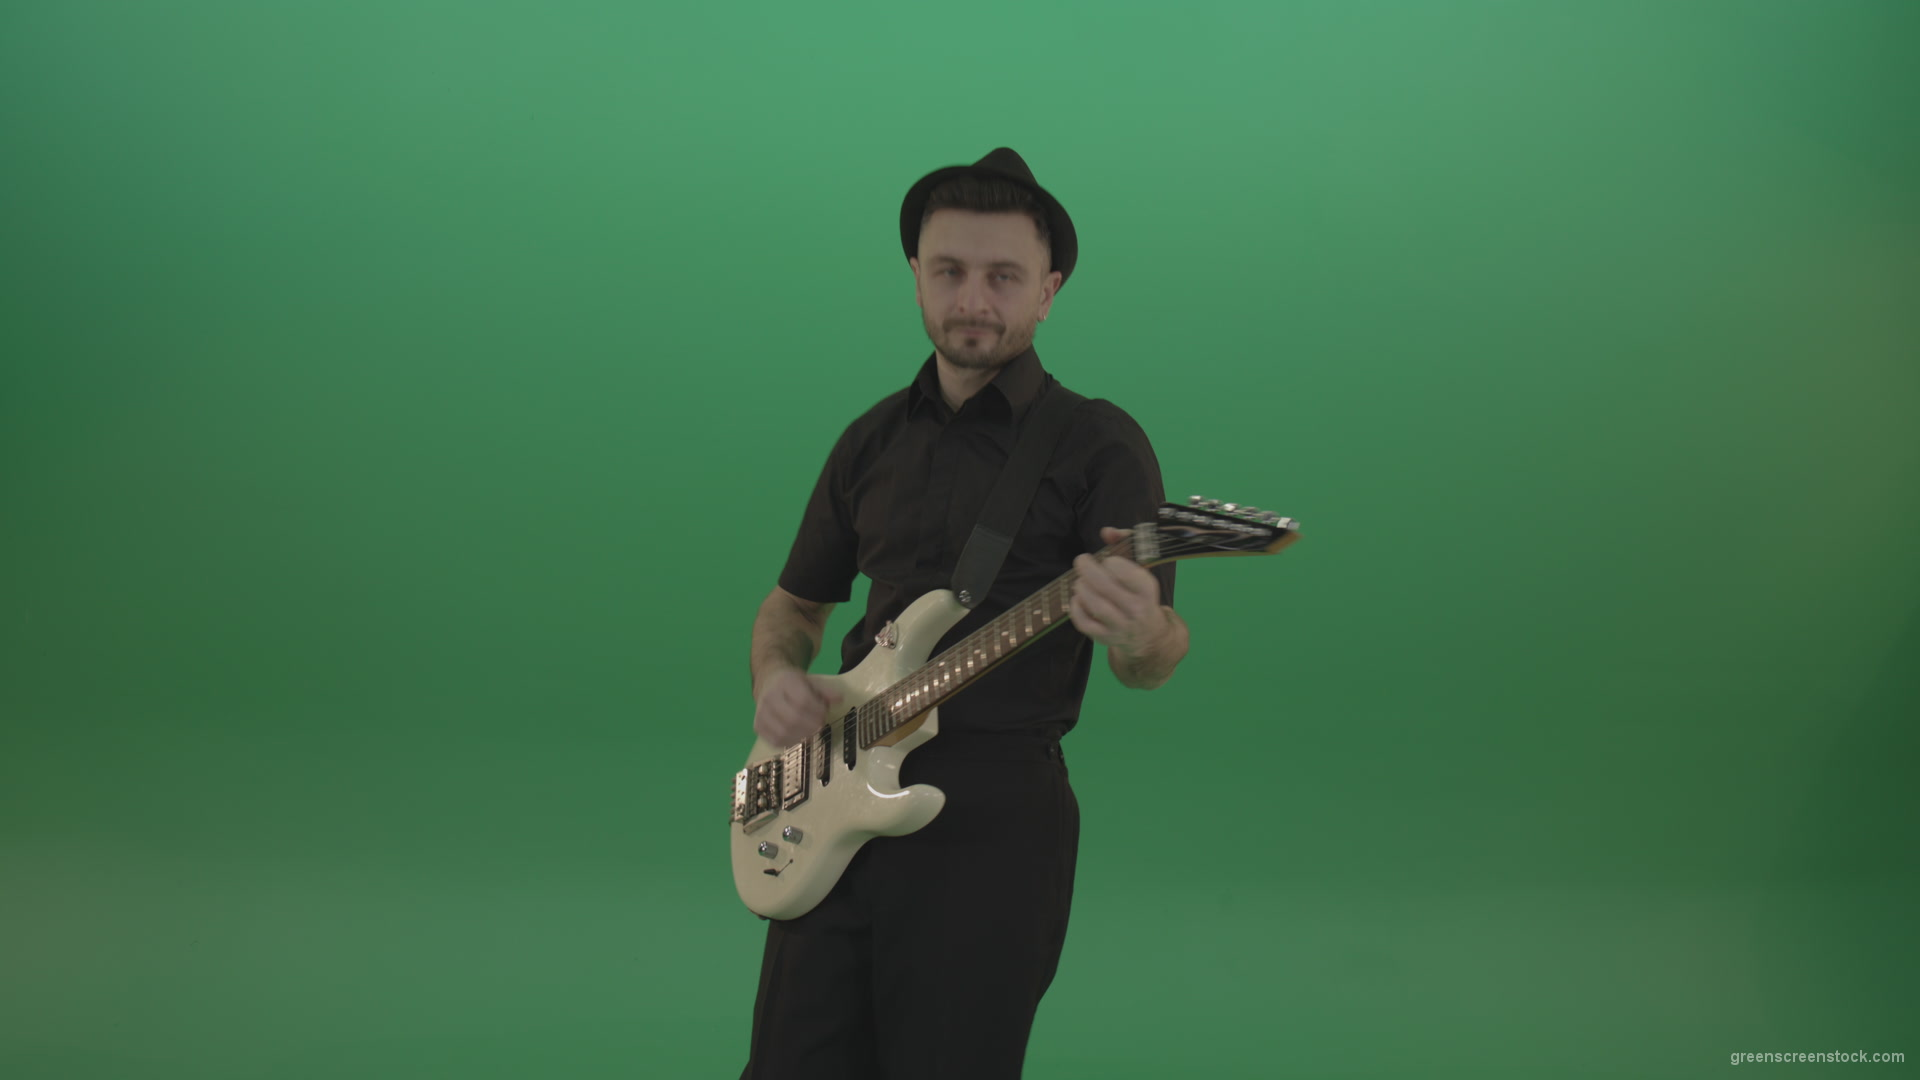 Man-in-black-playing-white-guitar-on-green-screen_009 Green Screen Stock